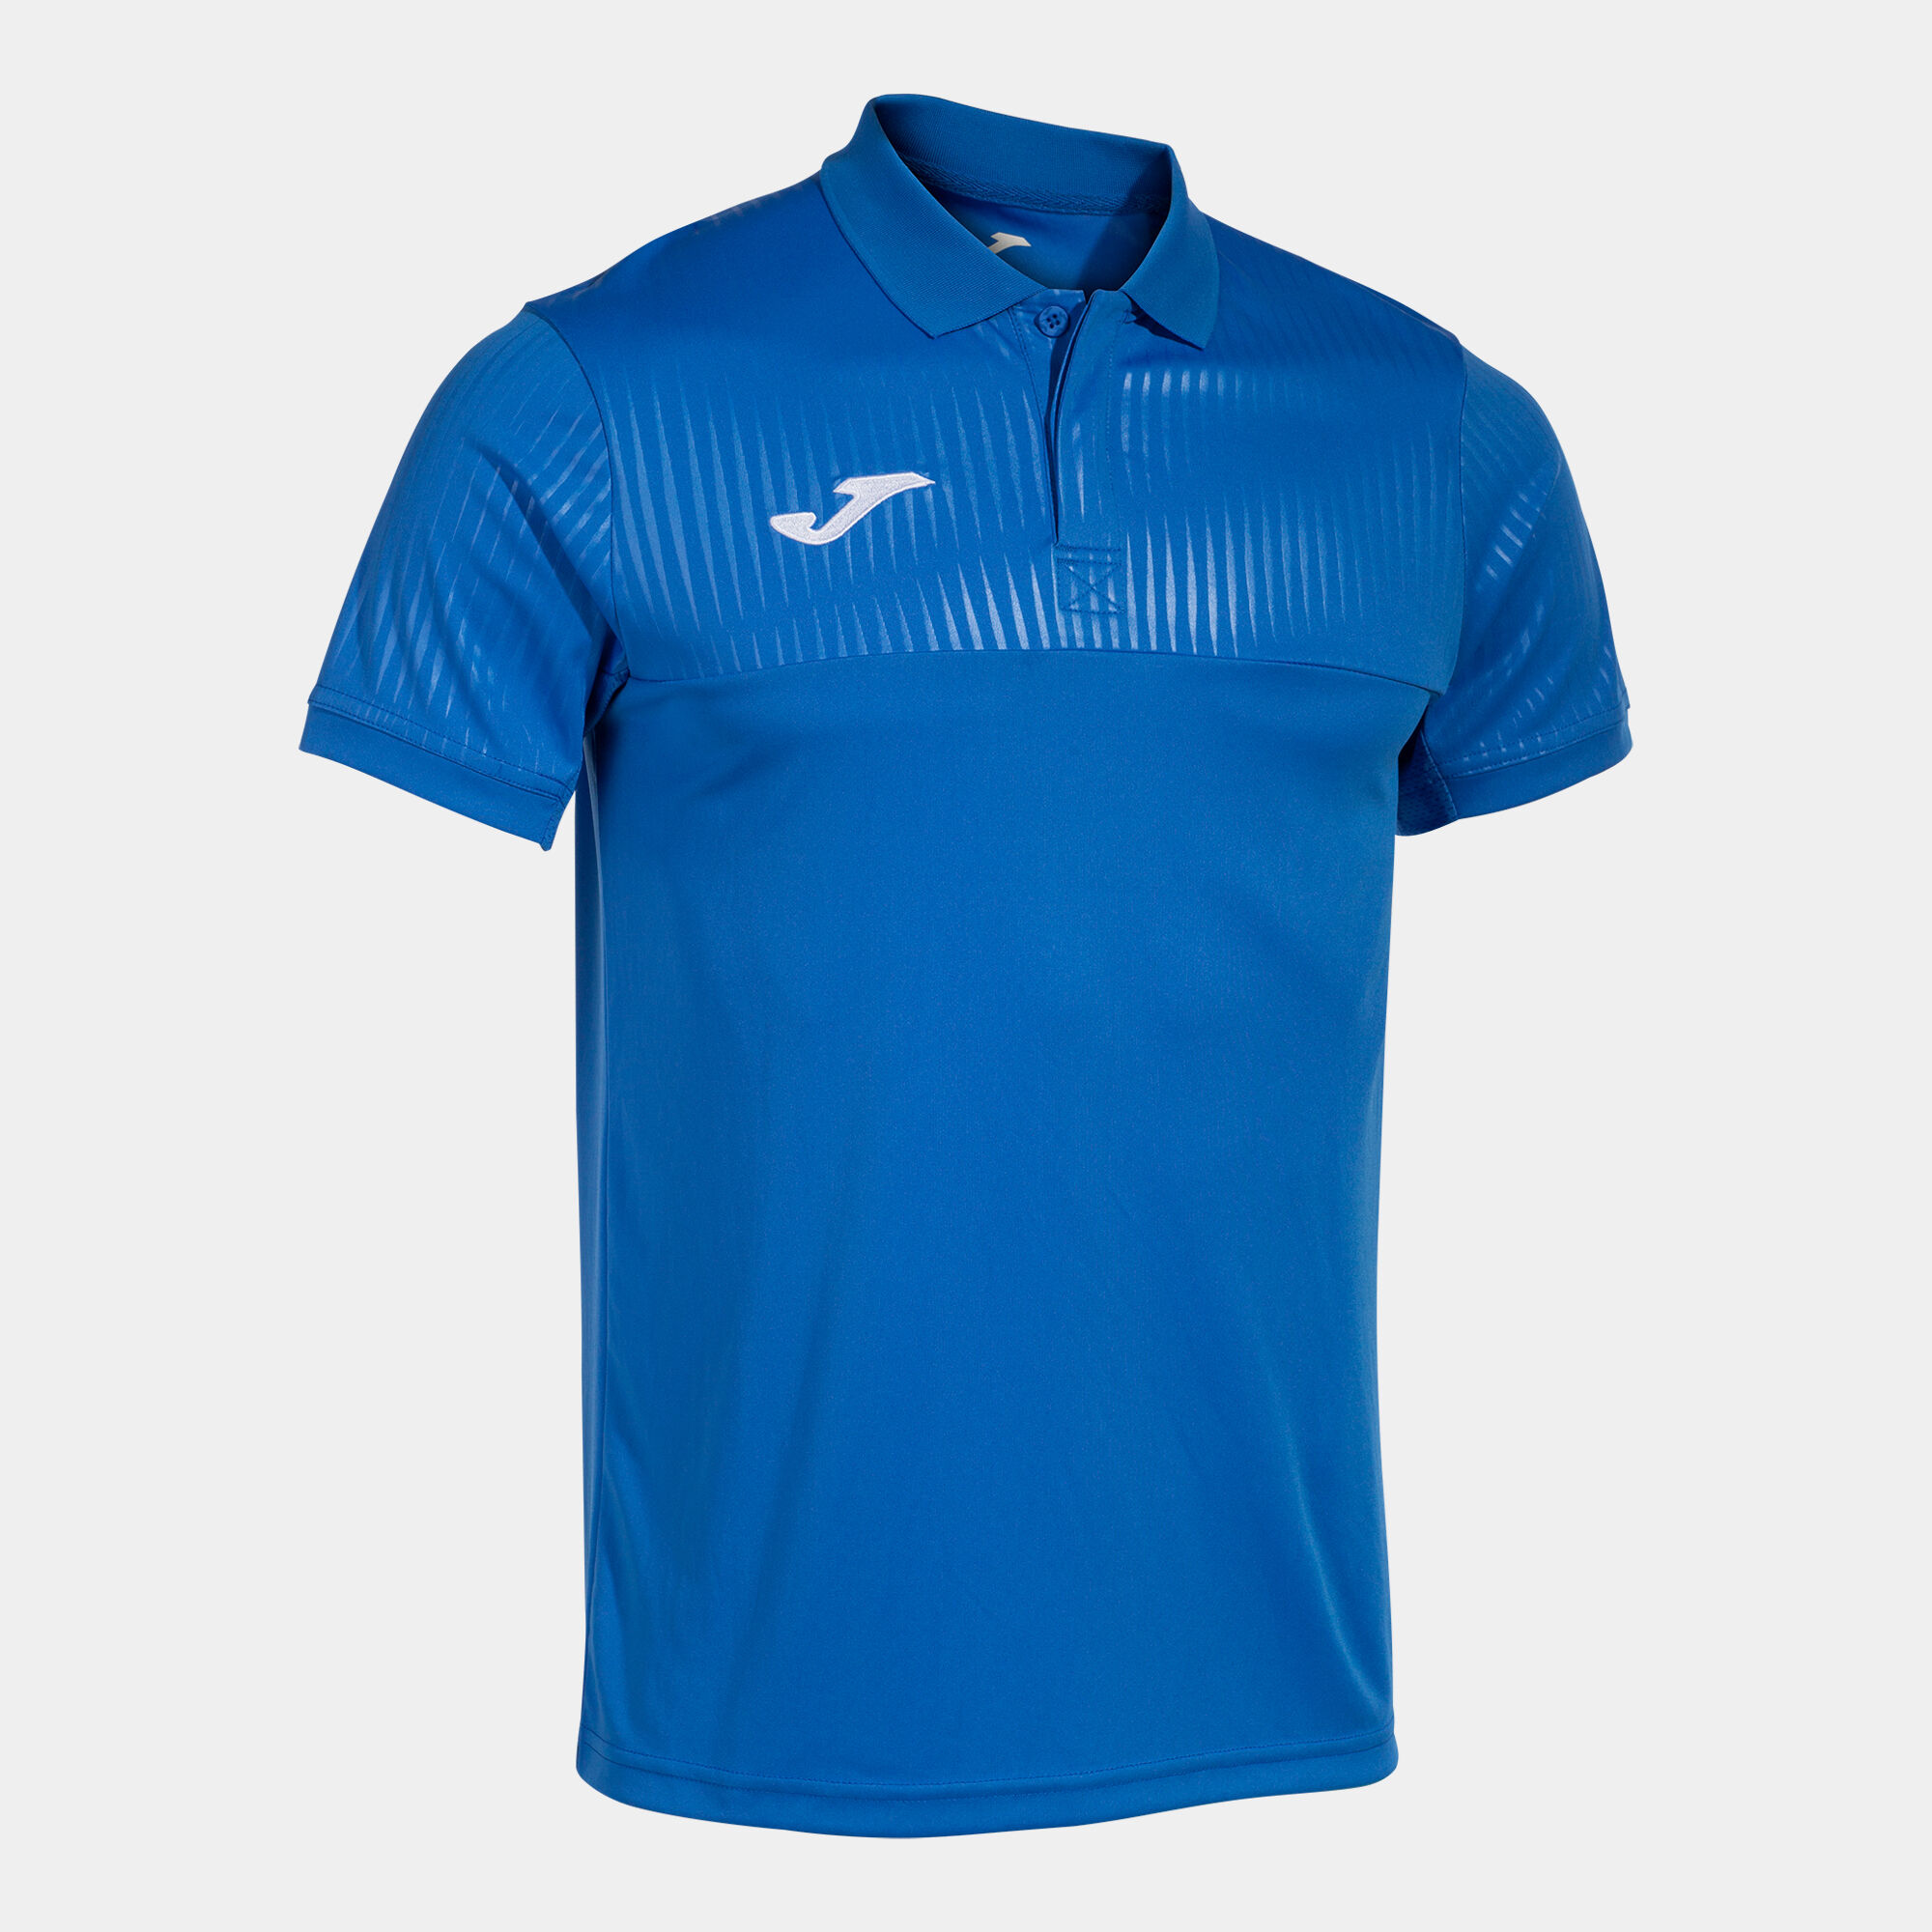 Polo shirt short-sleeve man Montreal royal blue